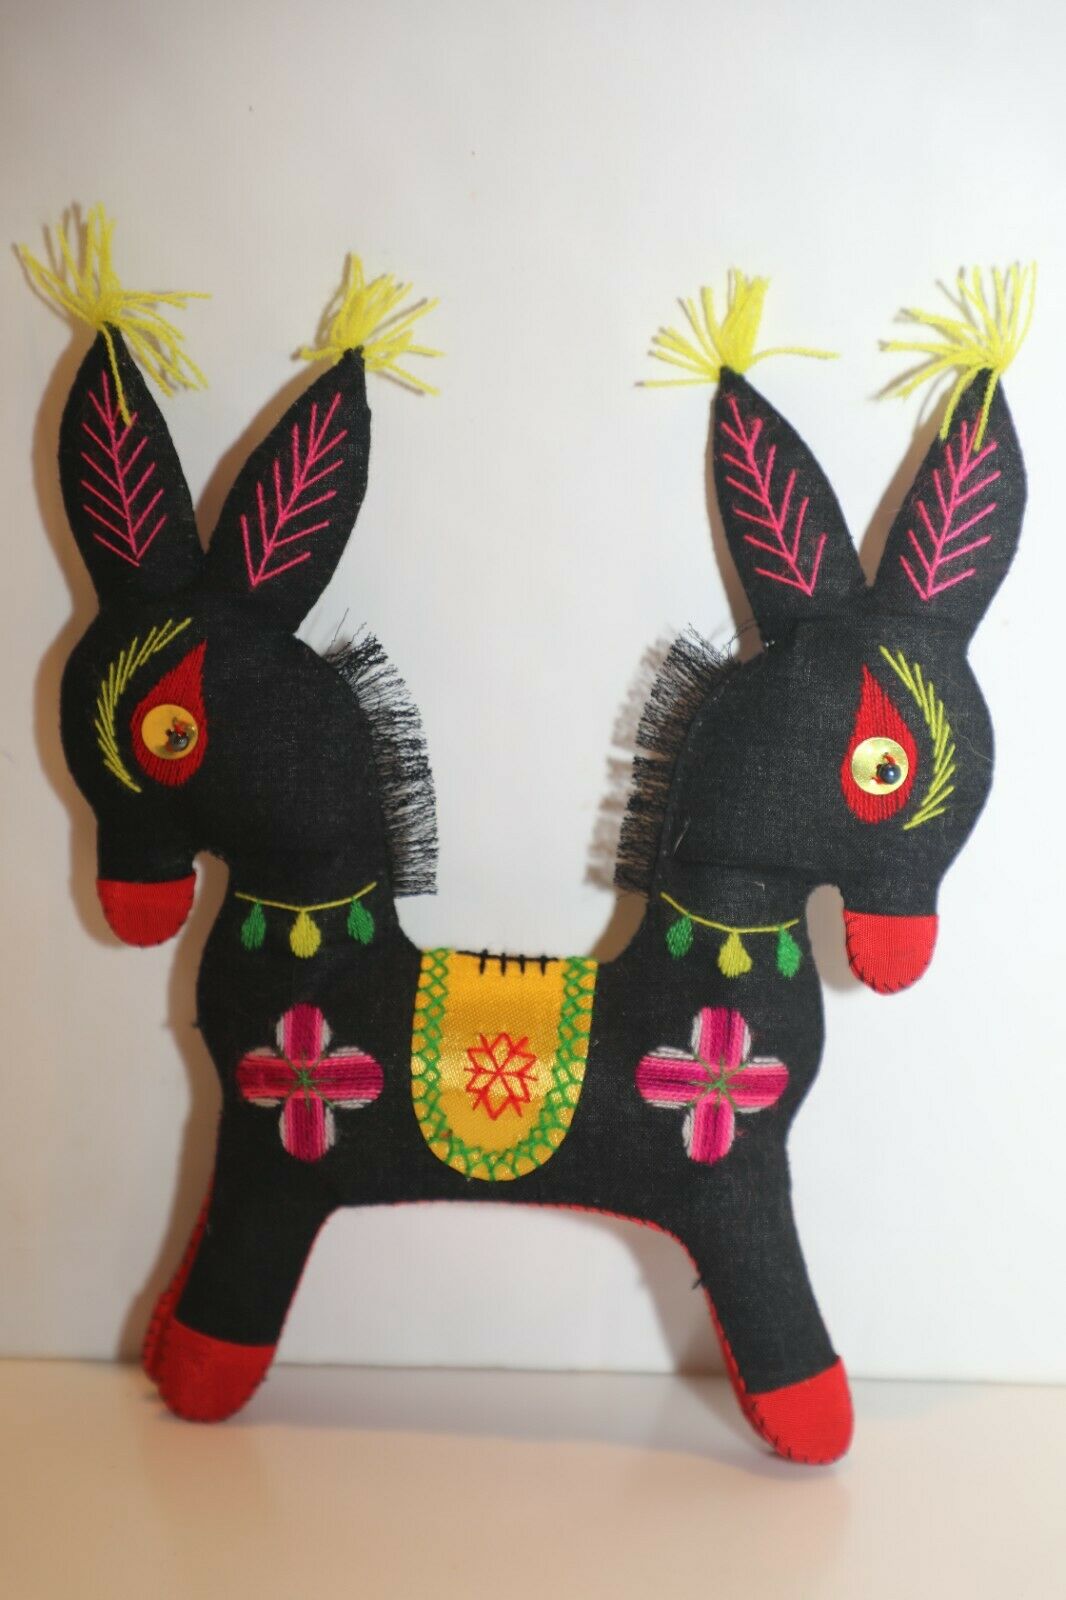 China Traditional Folk Art Cloth Plush Figure Two-headed Donkey Nwot